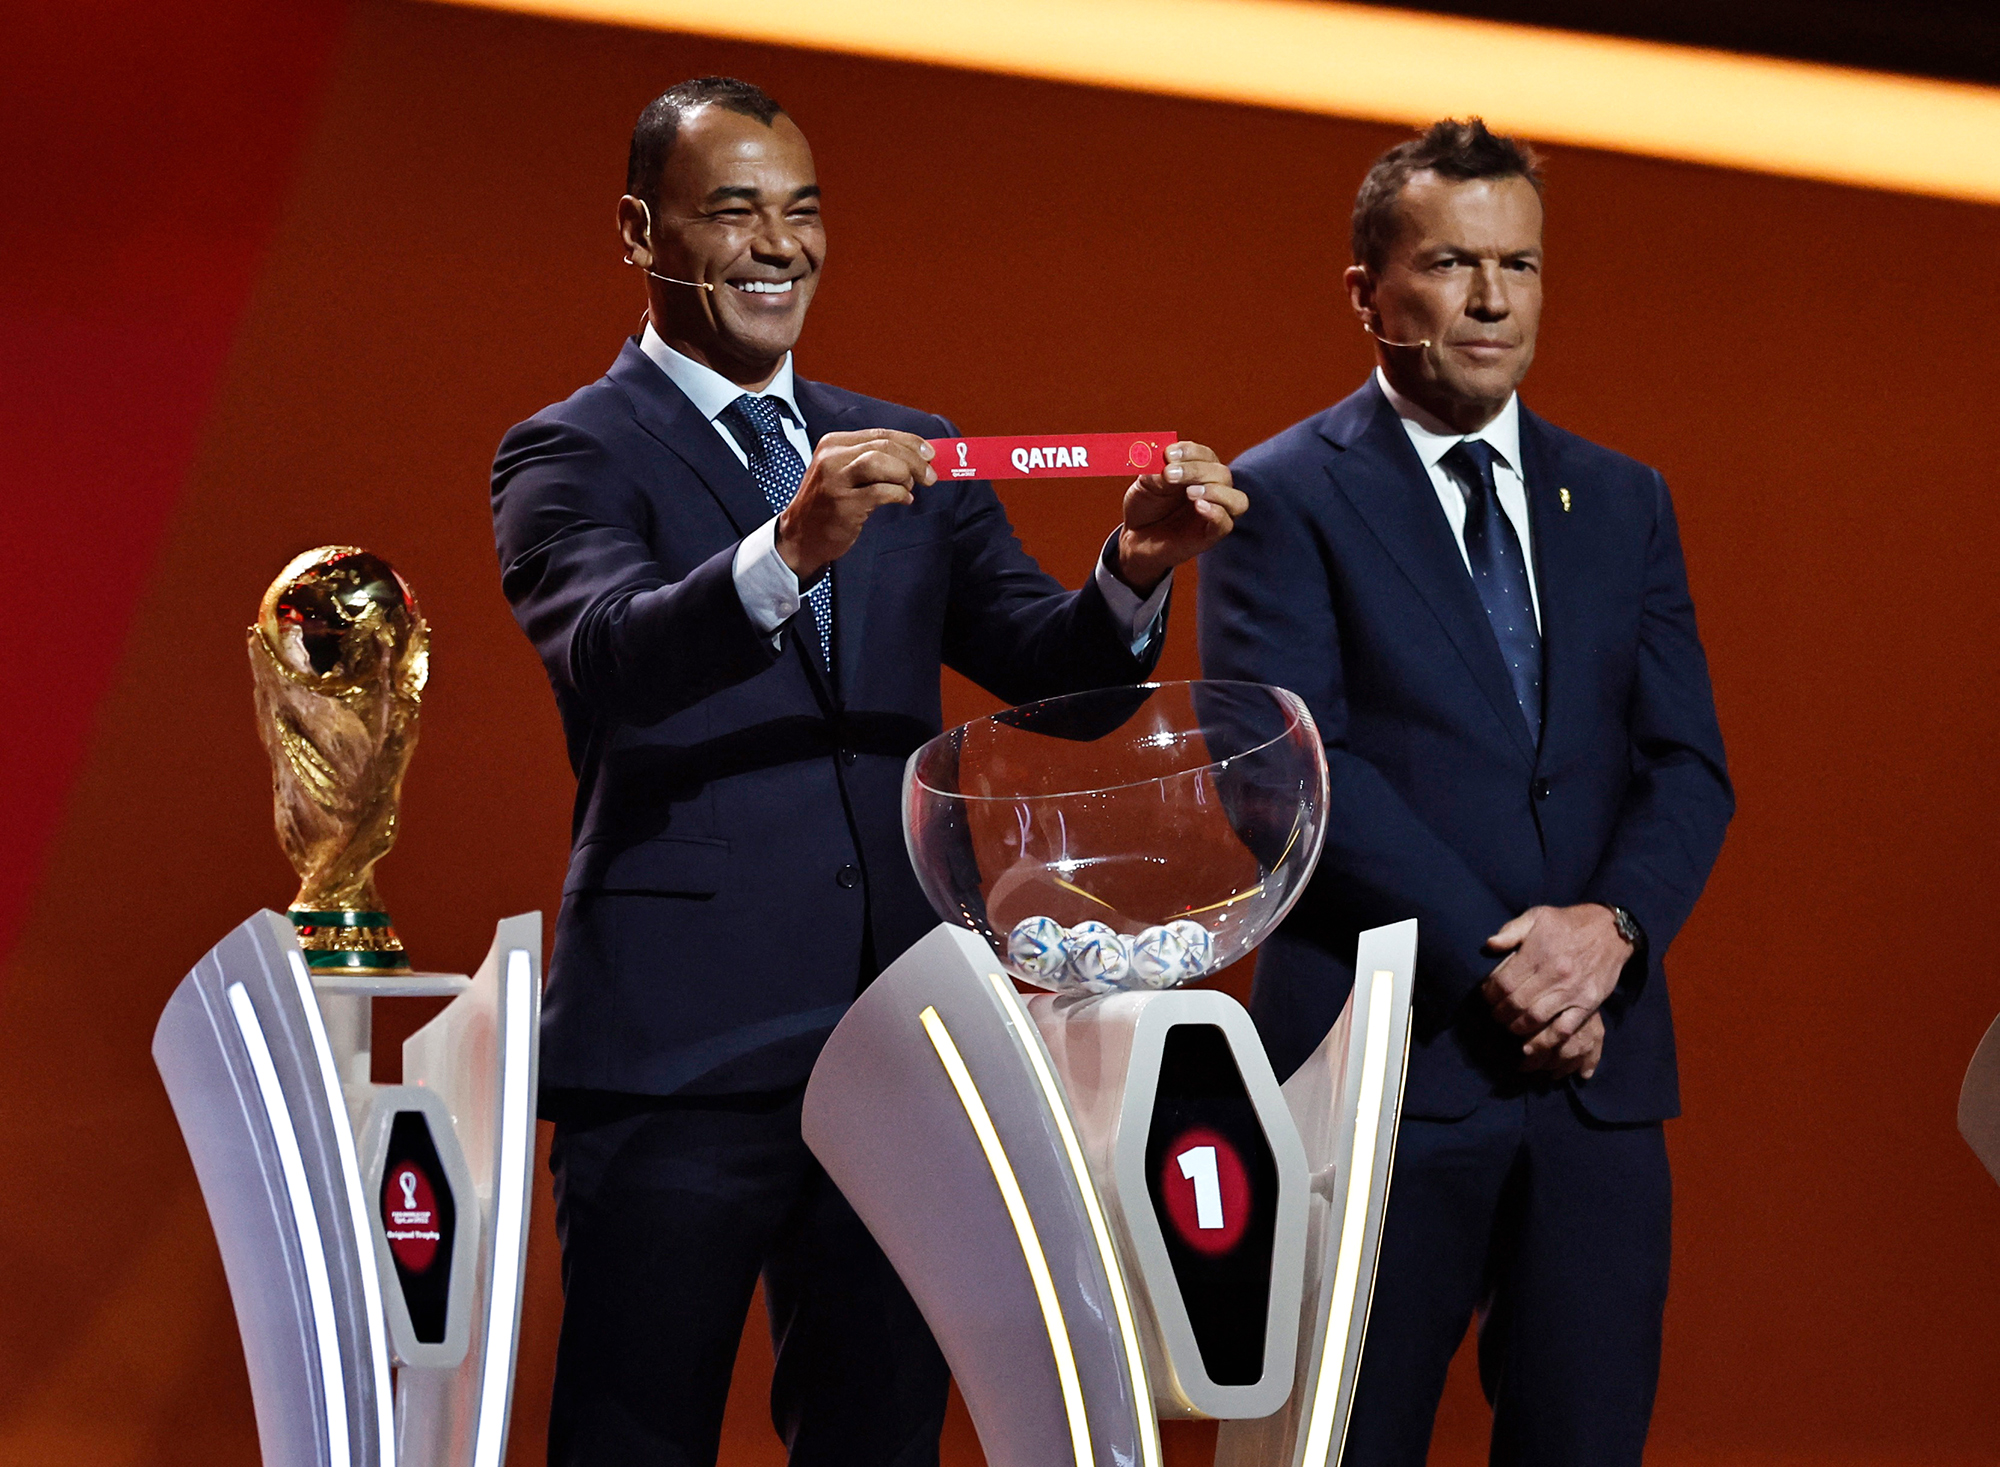 Groups world cup qatar 2022